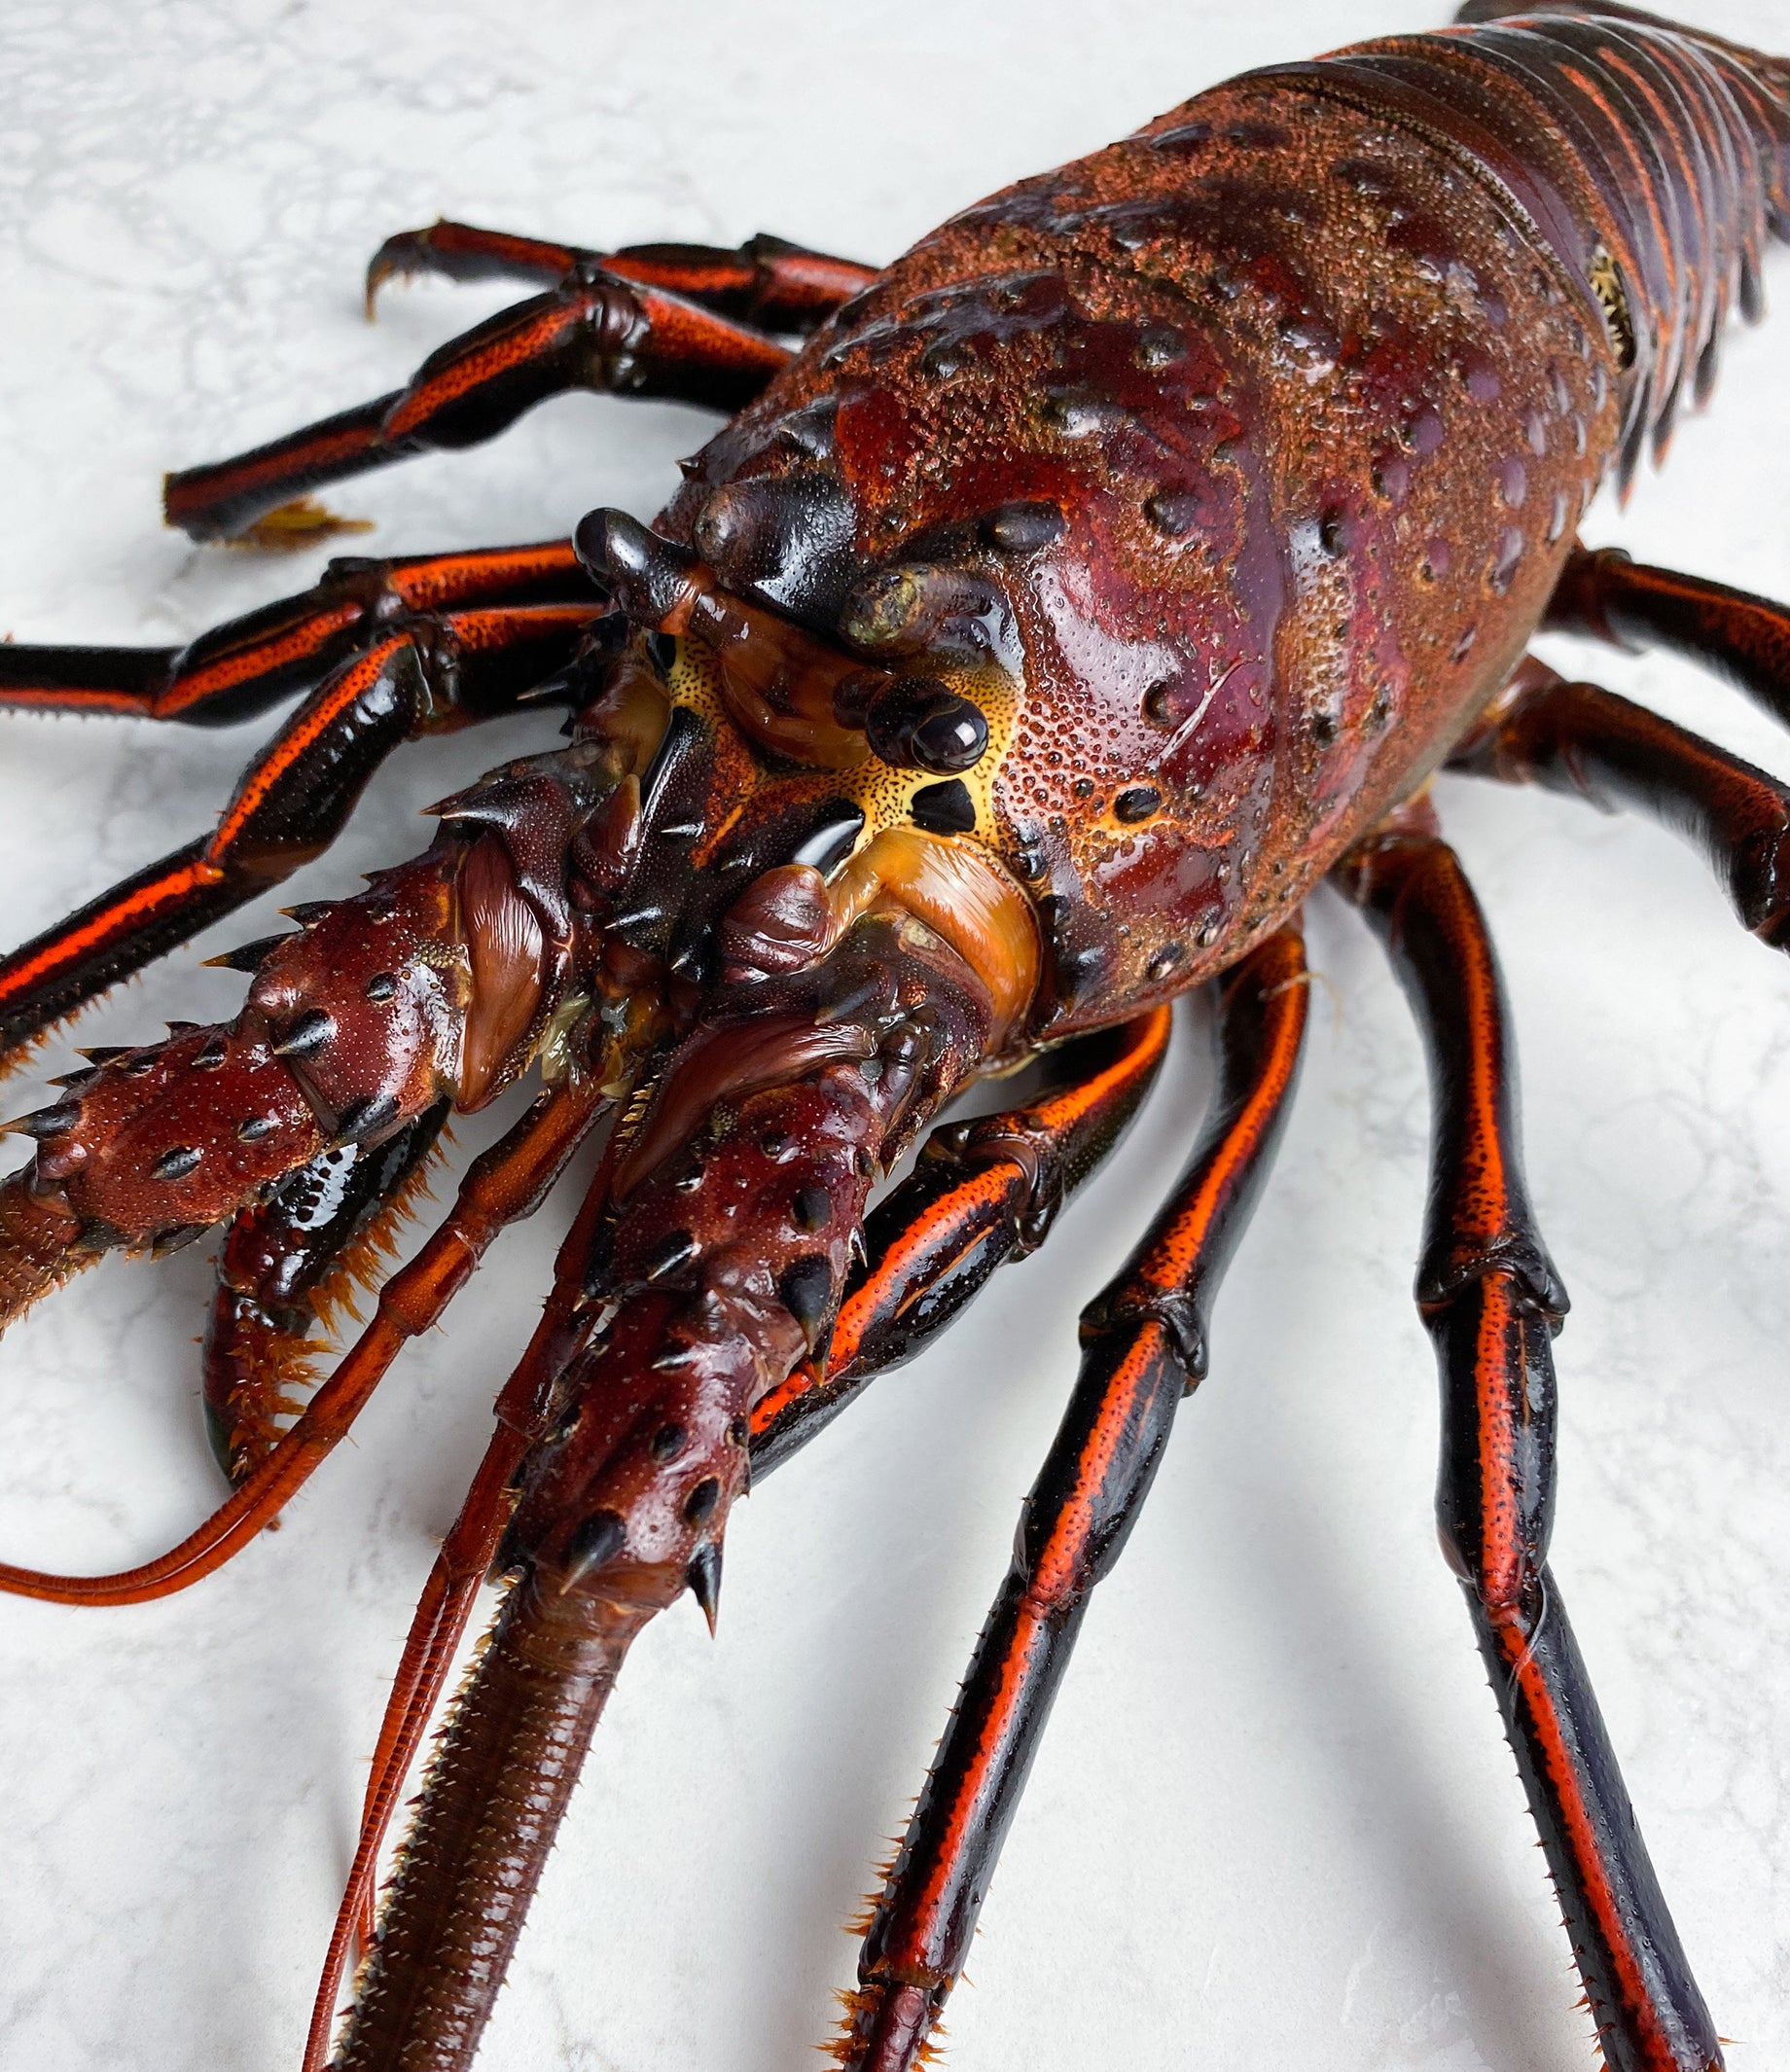 Live California Spiny Lobster, 1.25-1.5 lb. avg - Buy at Regalis Foods